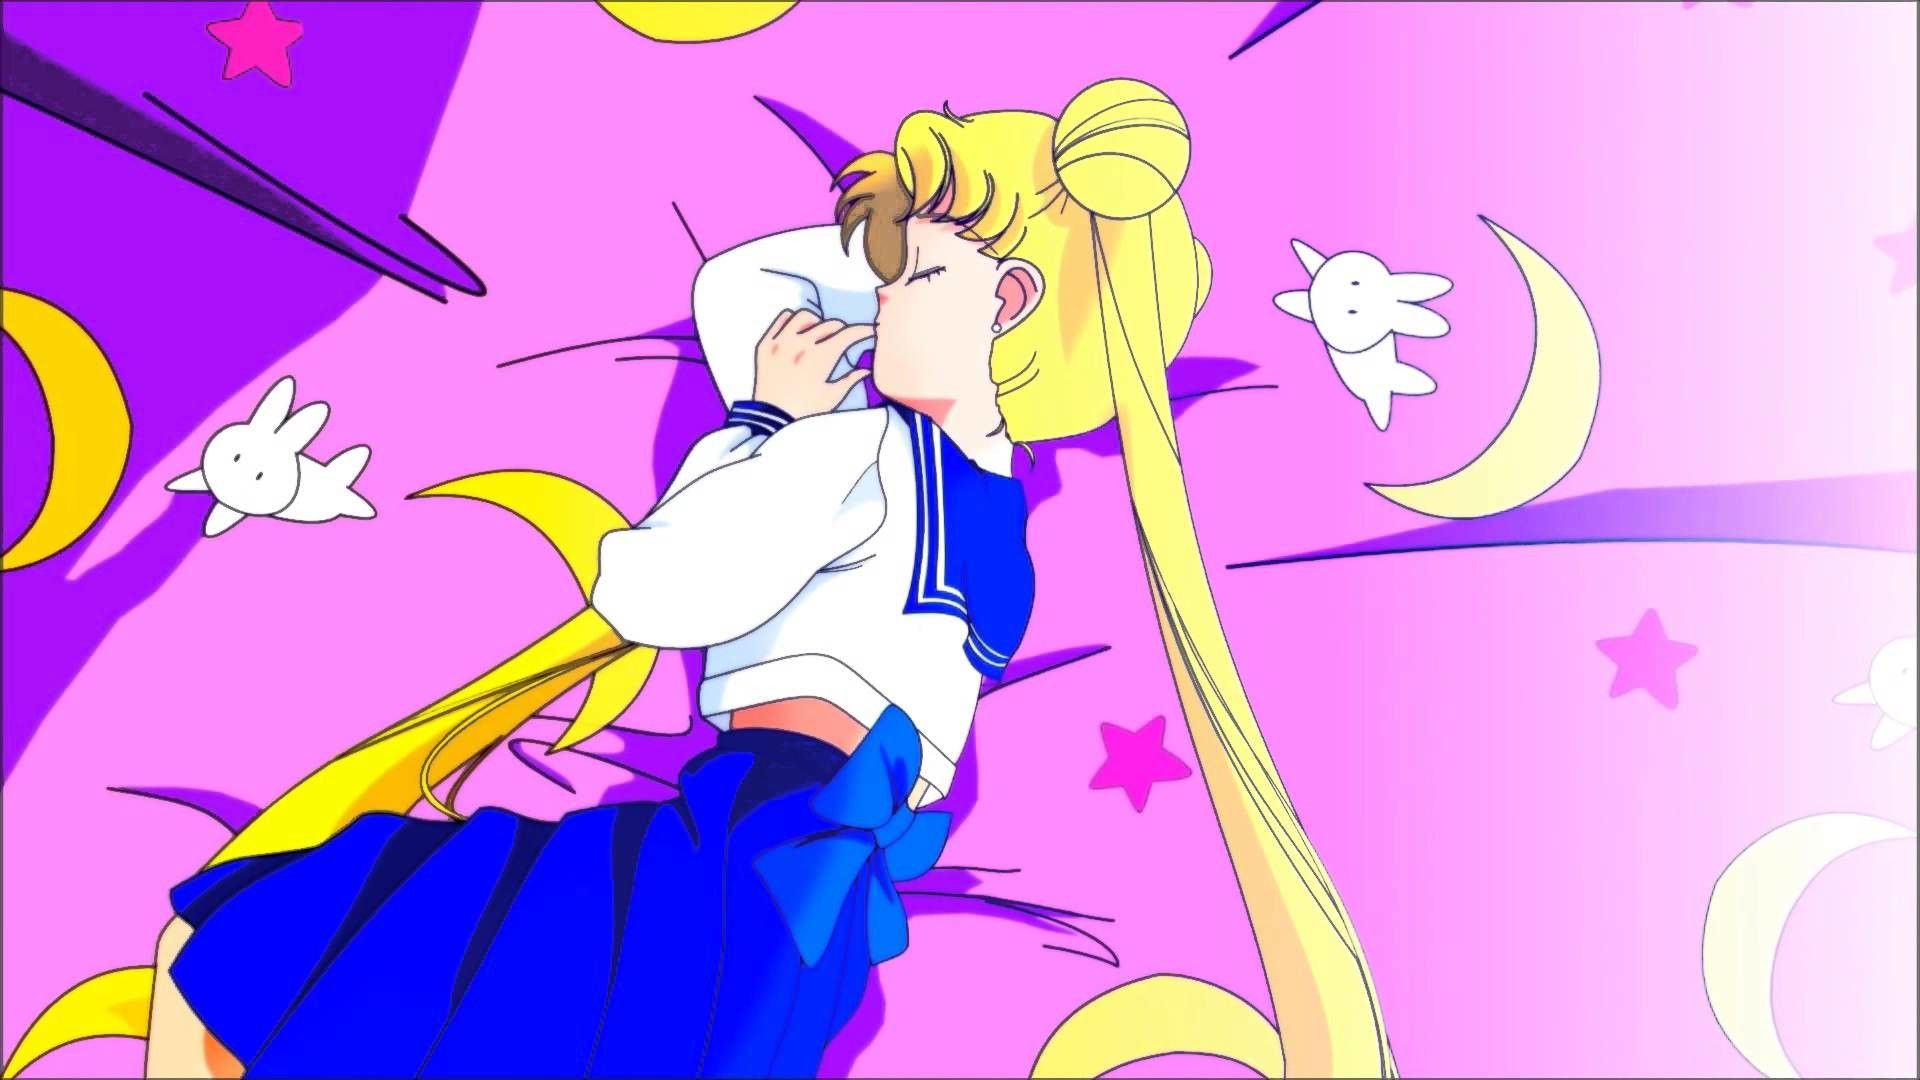 Aesthetic Sailor Moon Desktop Wallpapers - Wallpaper Cave